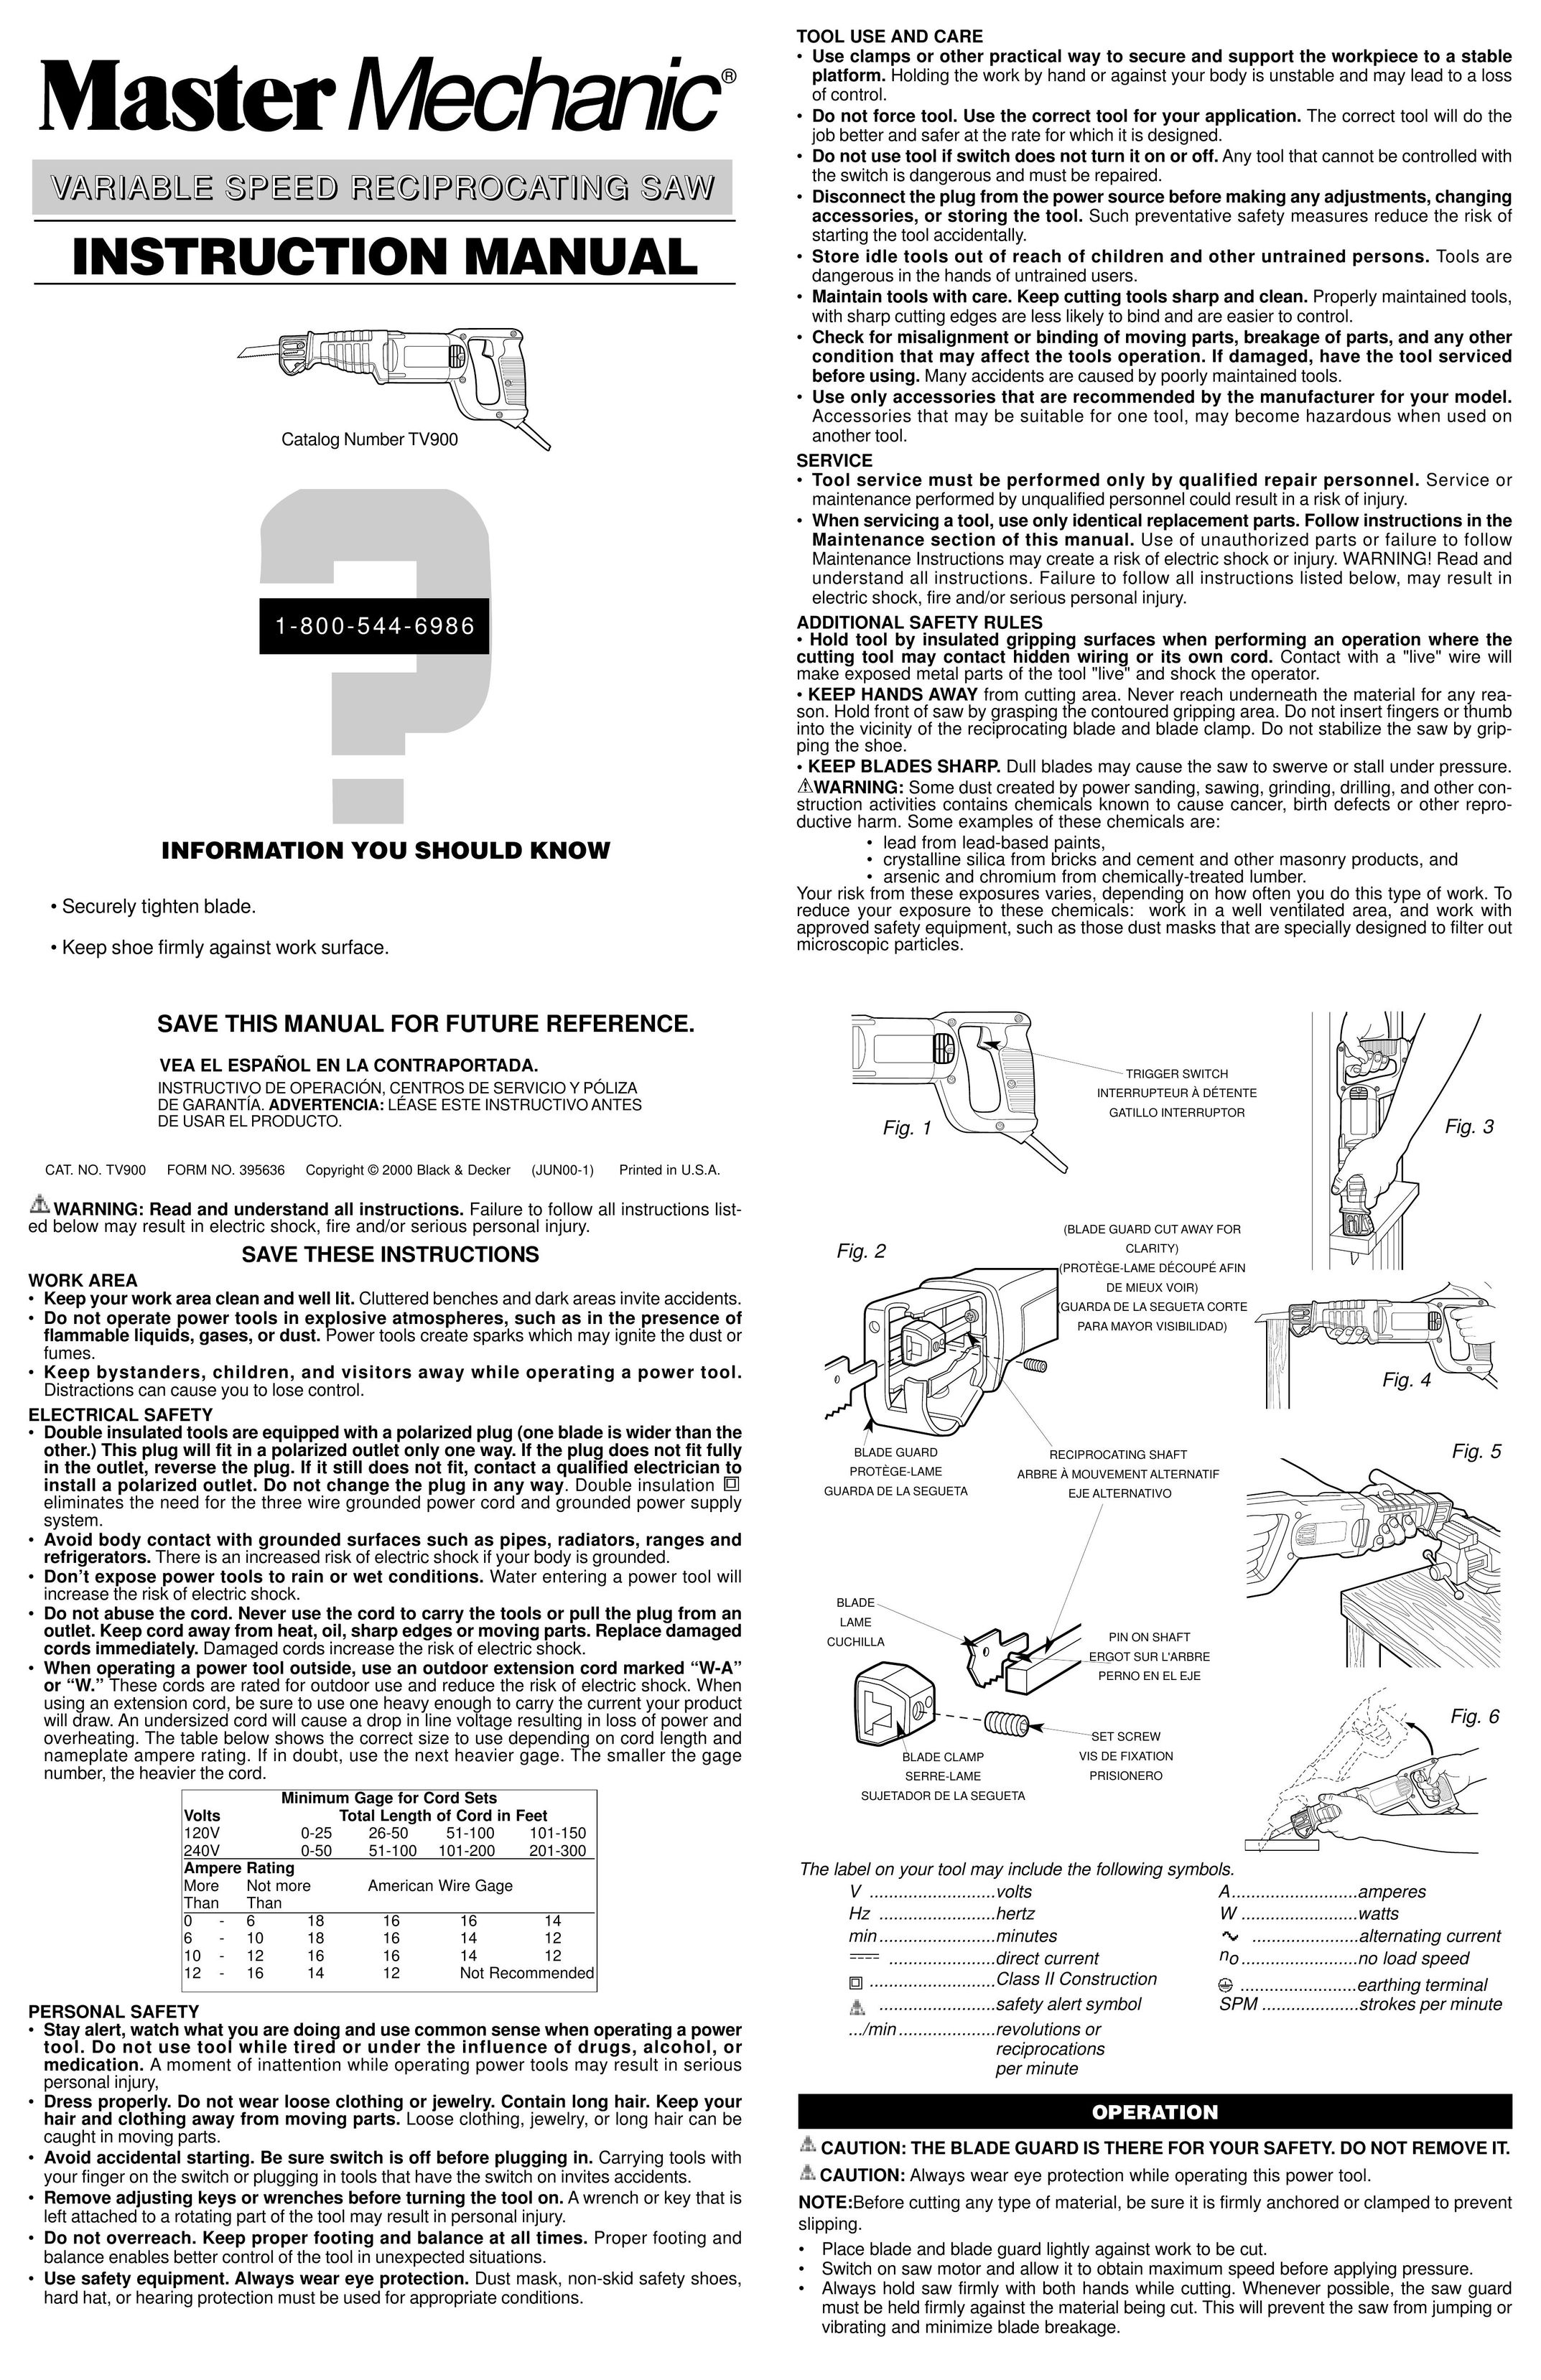 Black & Decker 395636 Saw User Manual